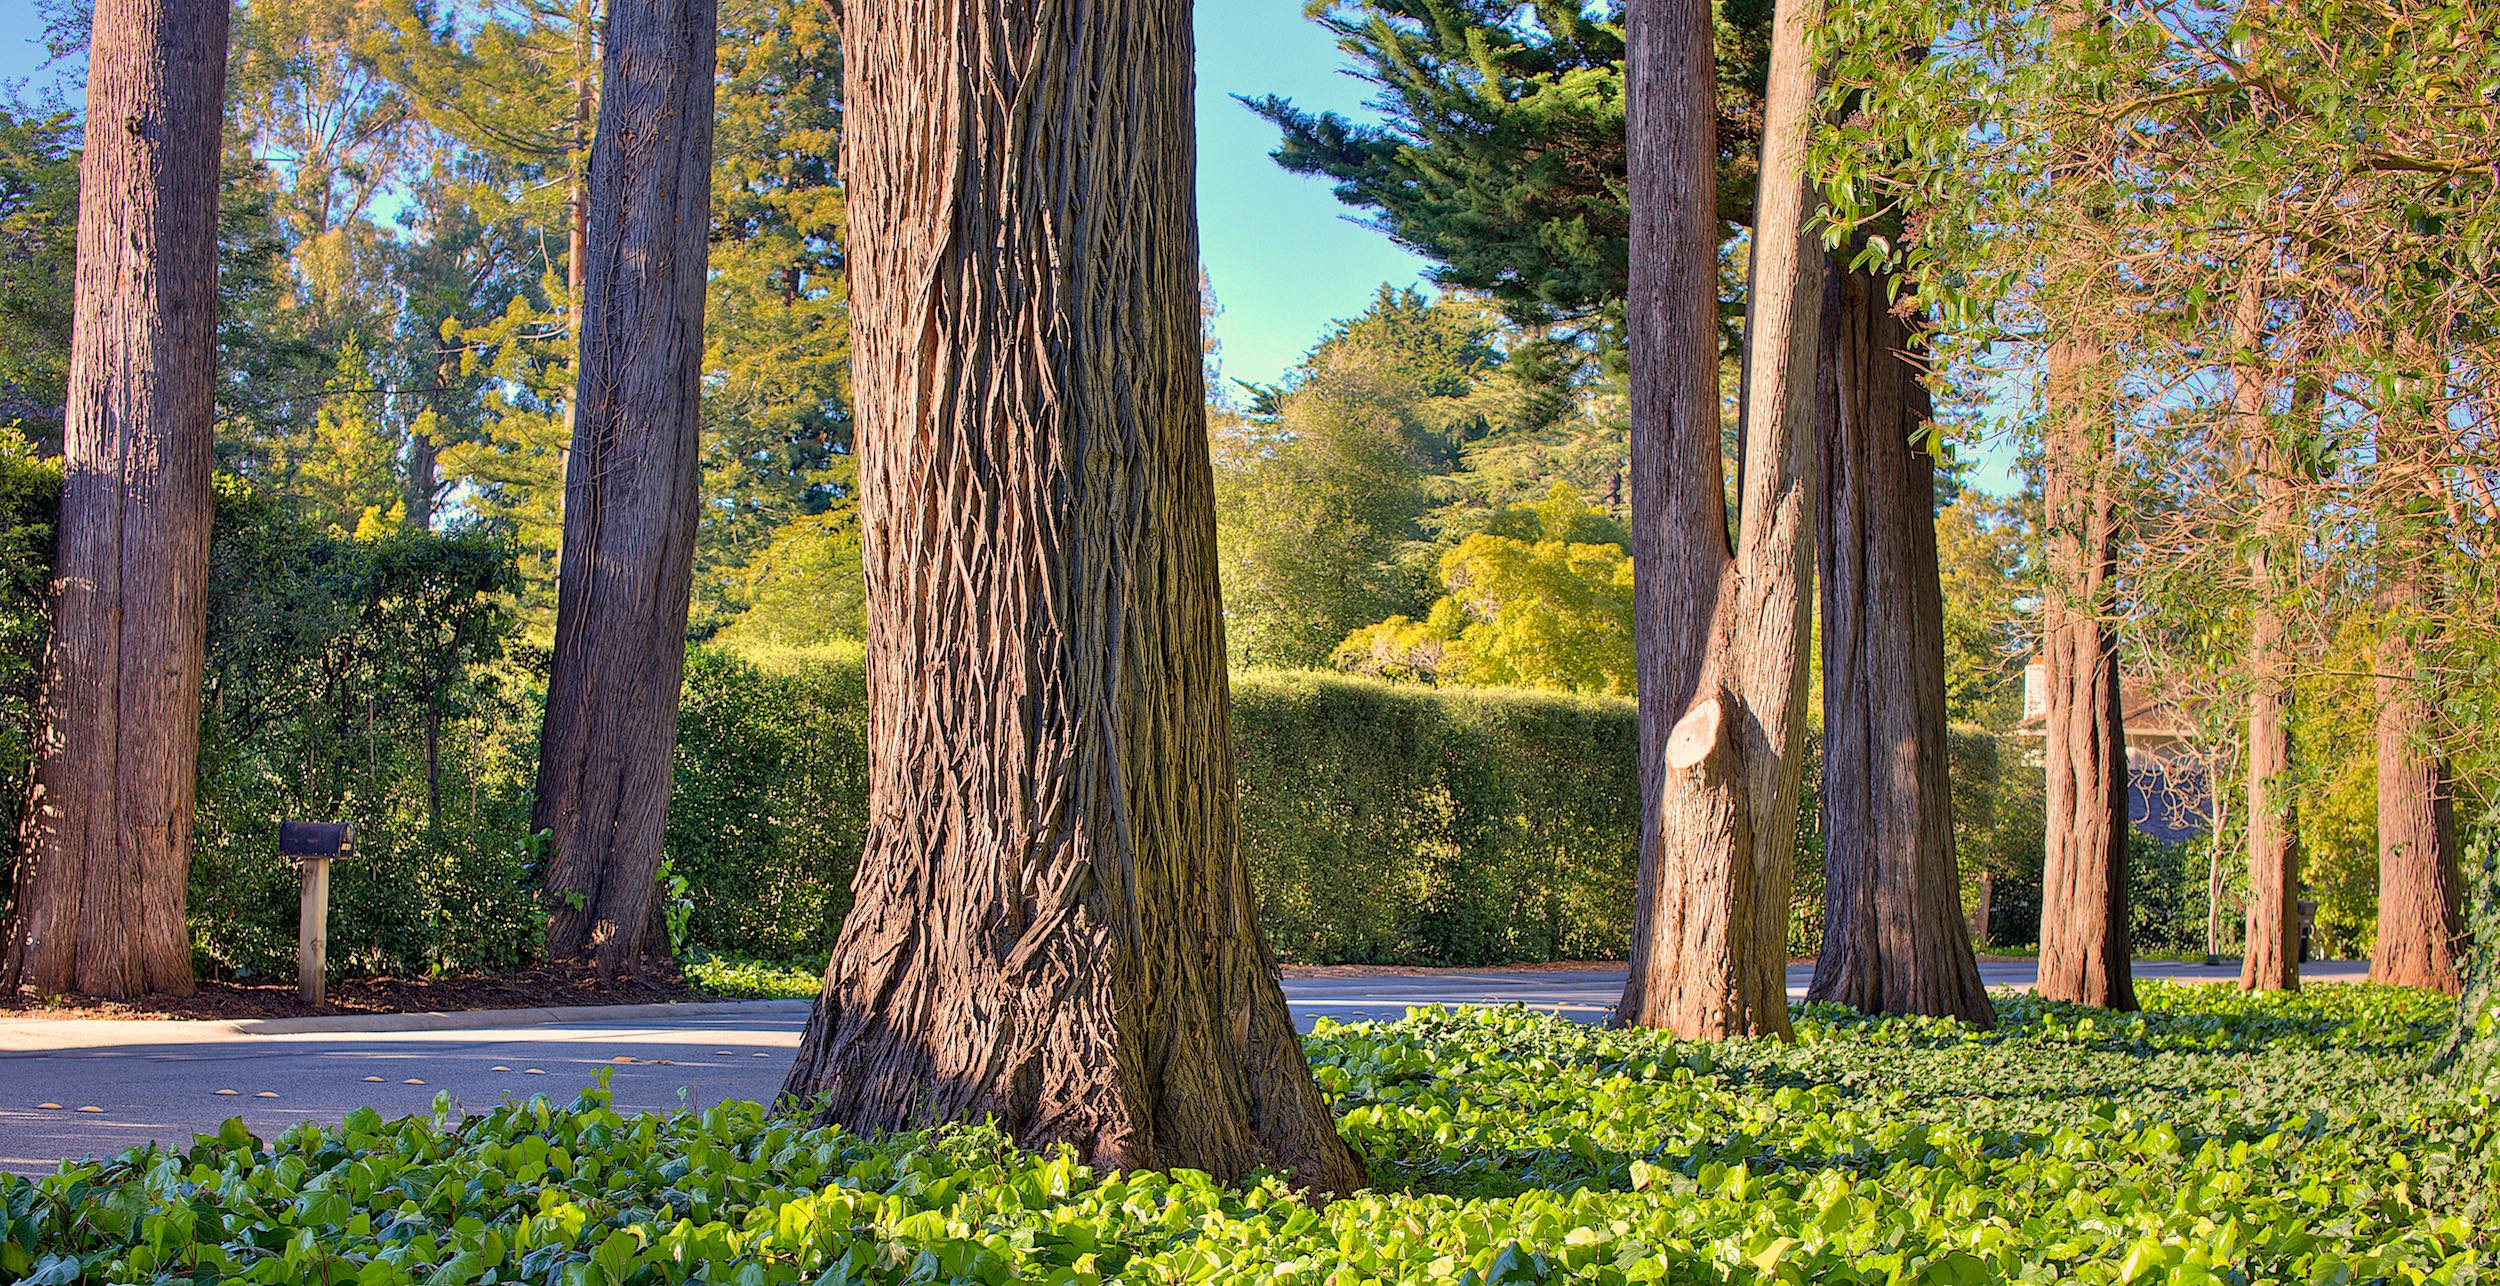 Big trees along a street in Hillsborough, CA